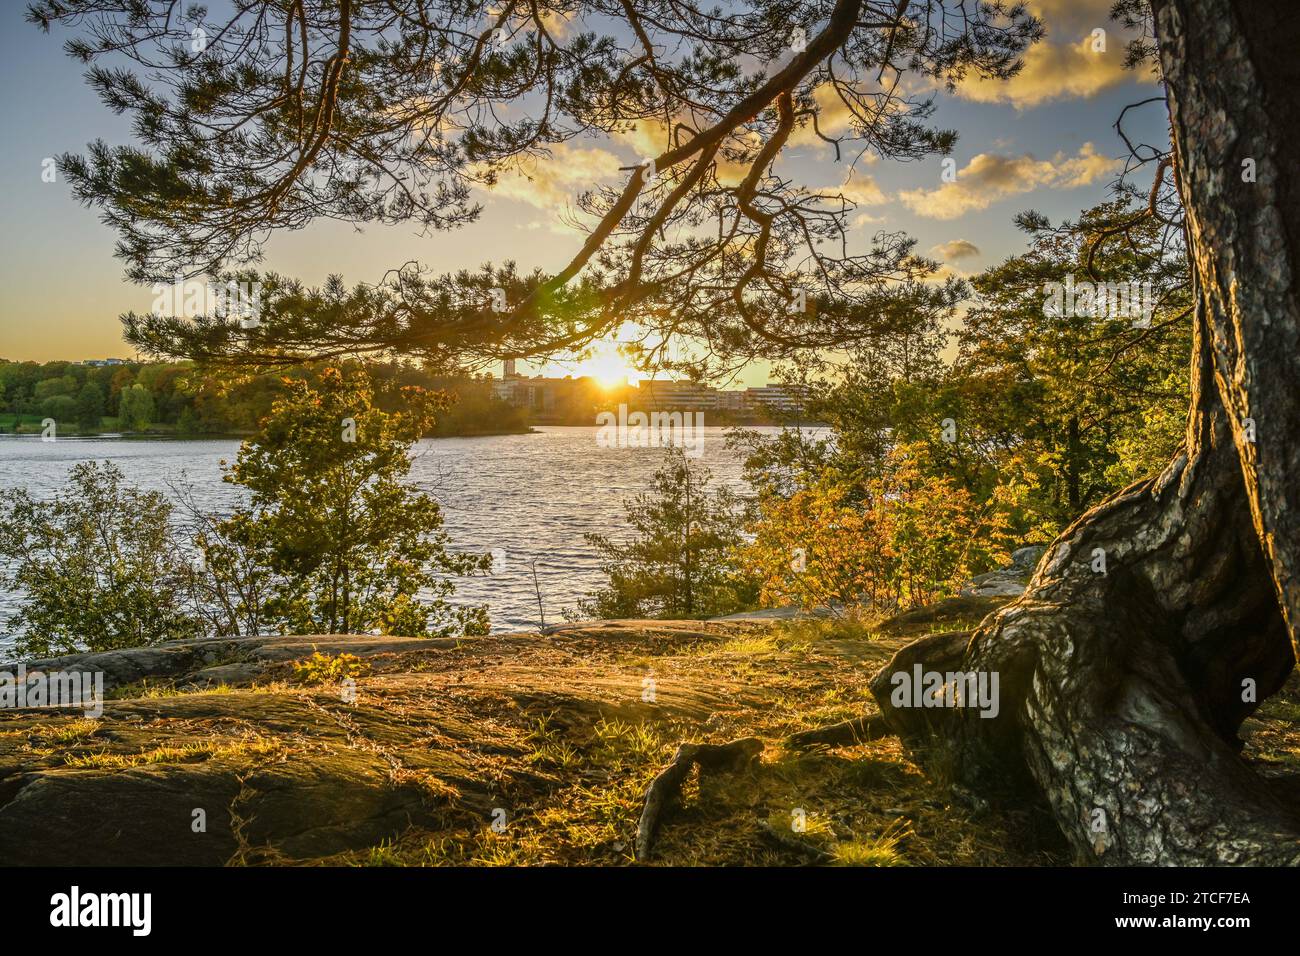 Sonnenuntergang am SEE Brunnsviken, Stoccolma, Schweden Foto Stock